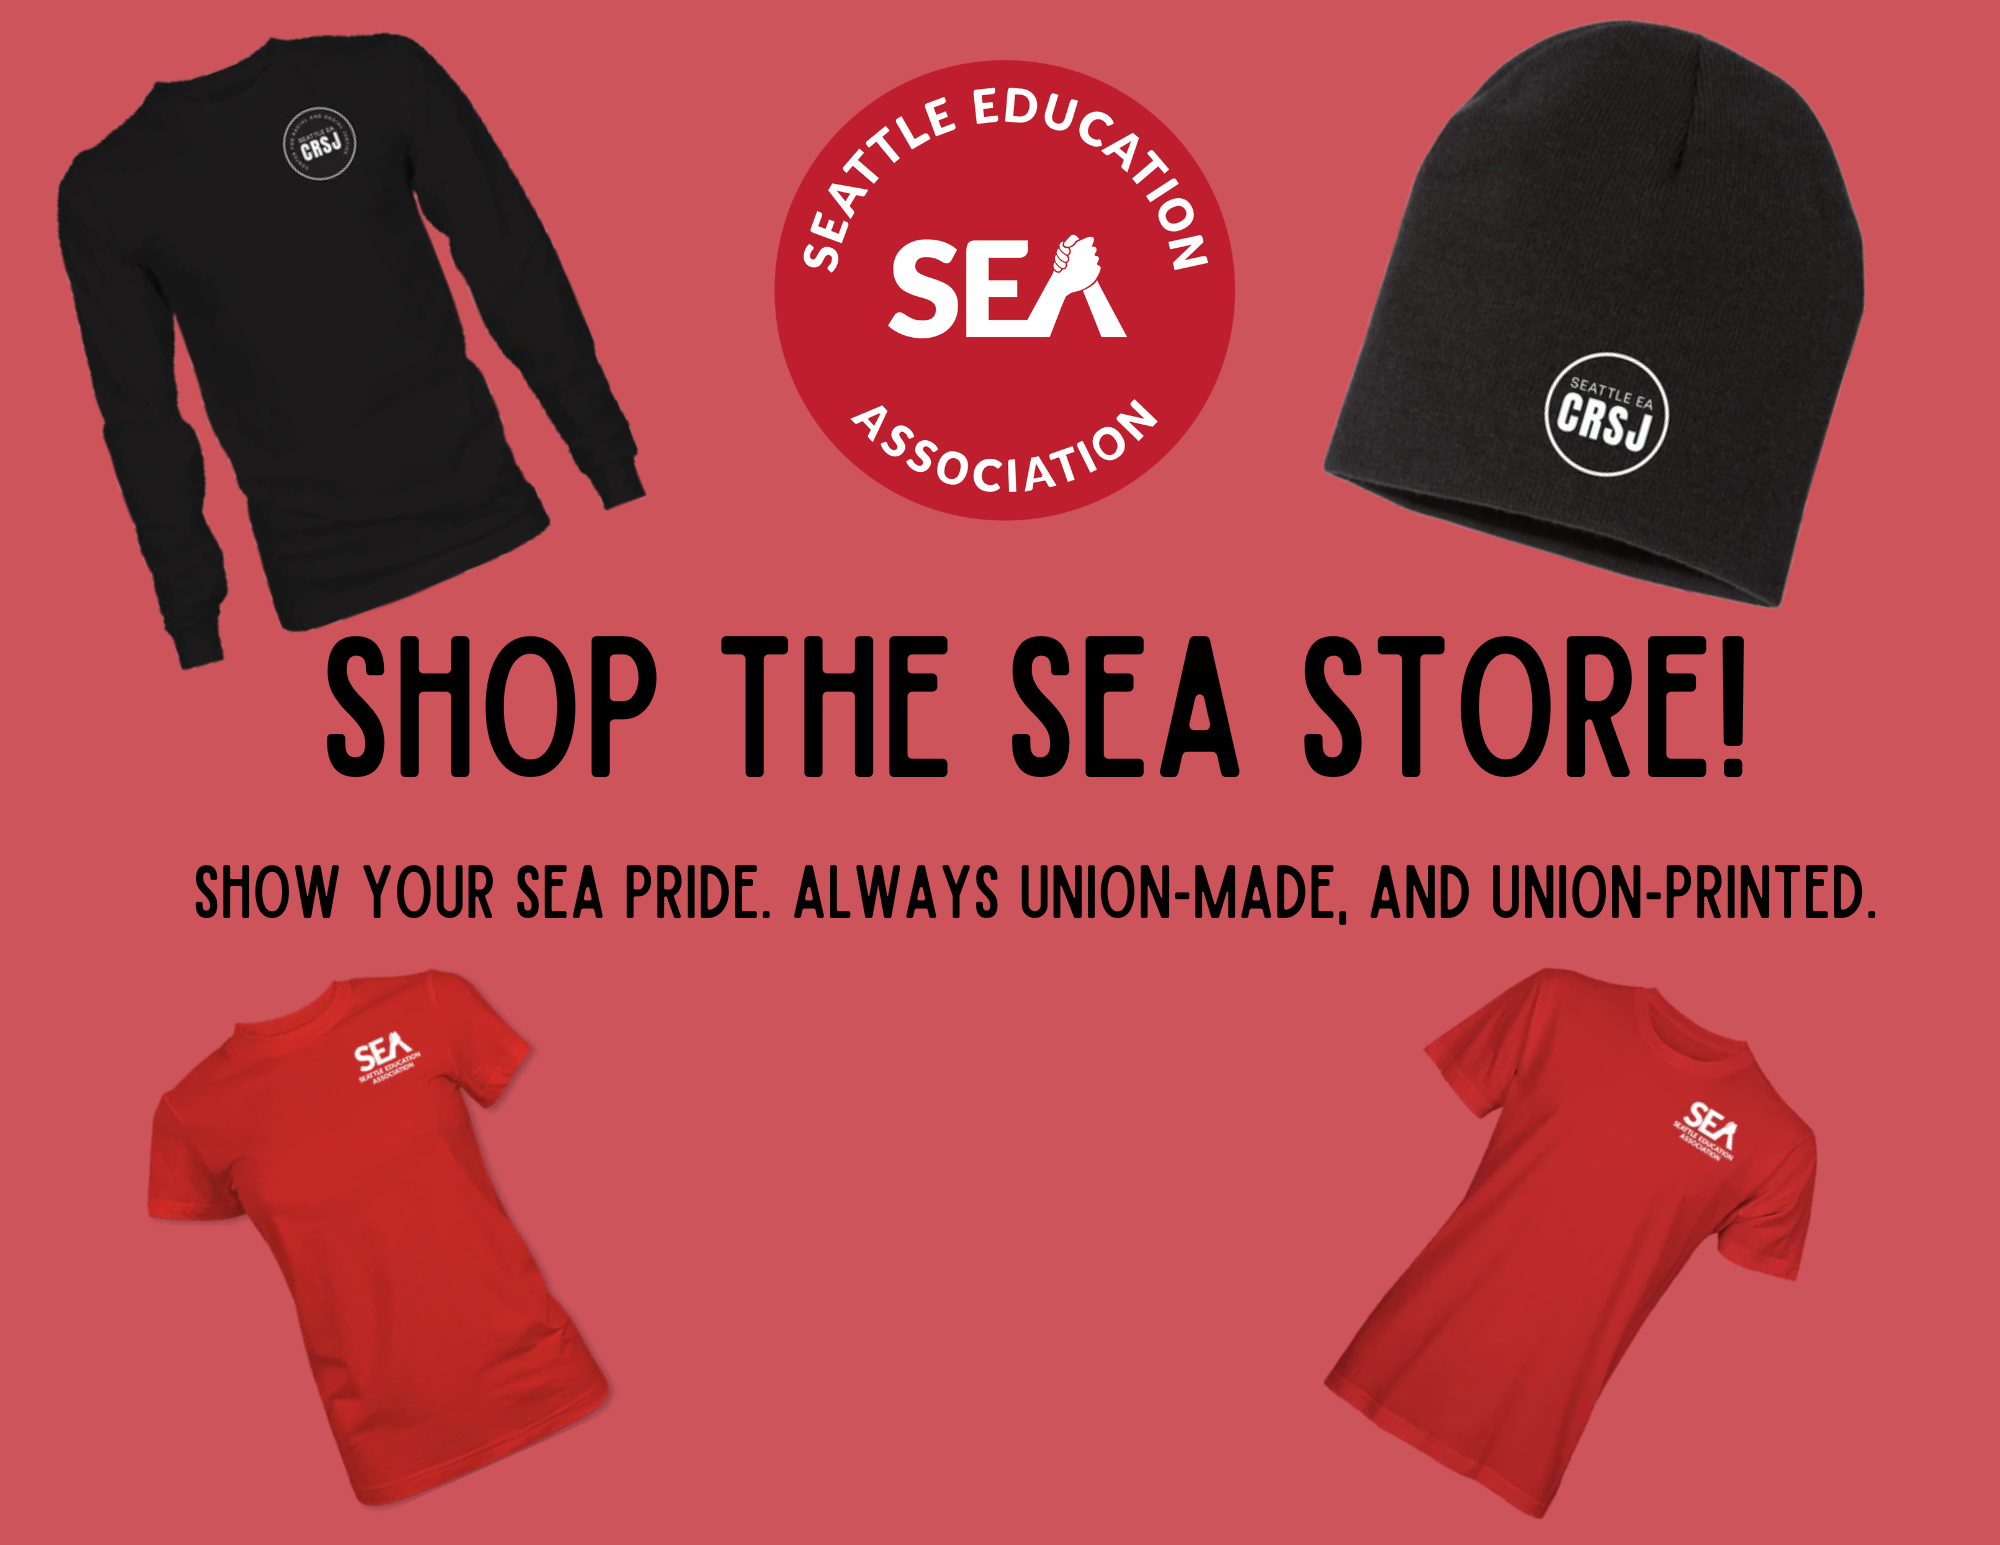 SEA store image